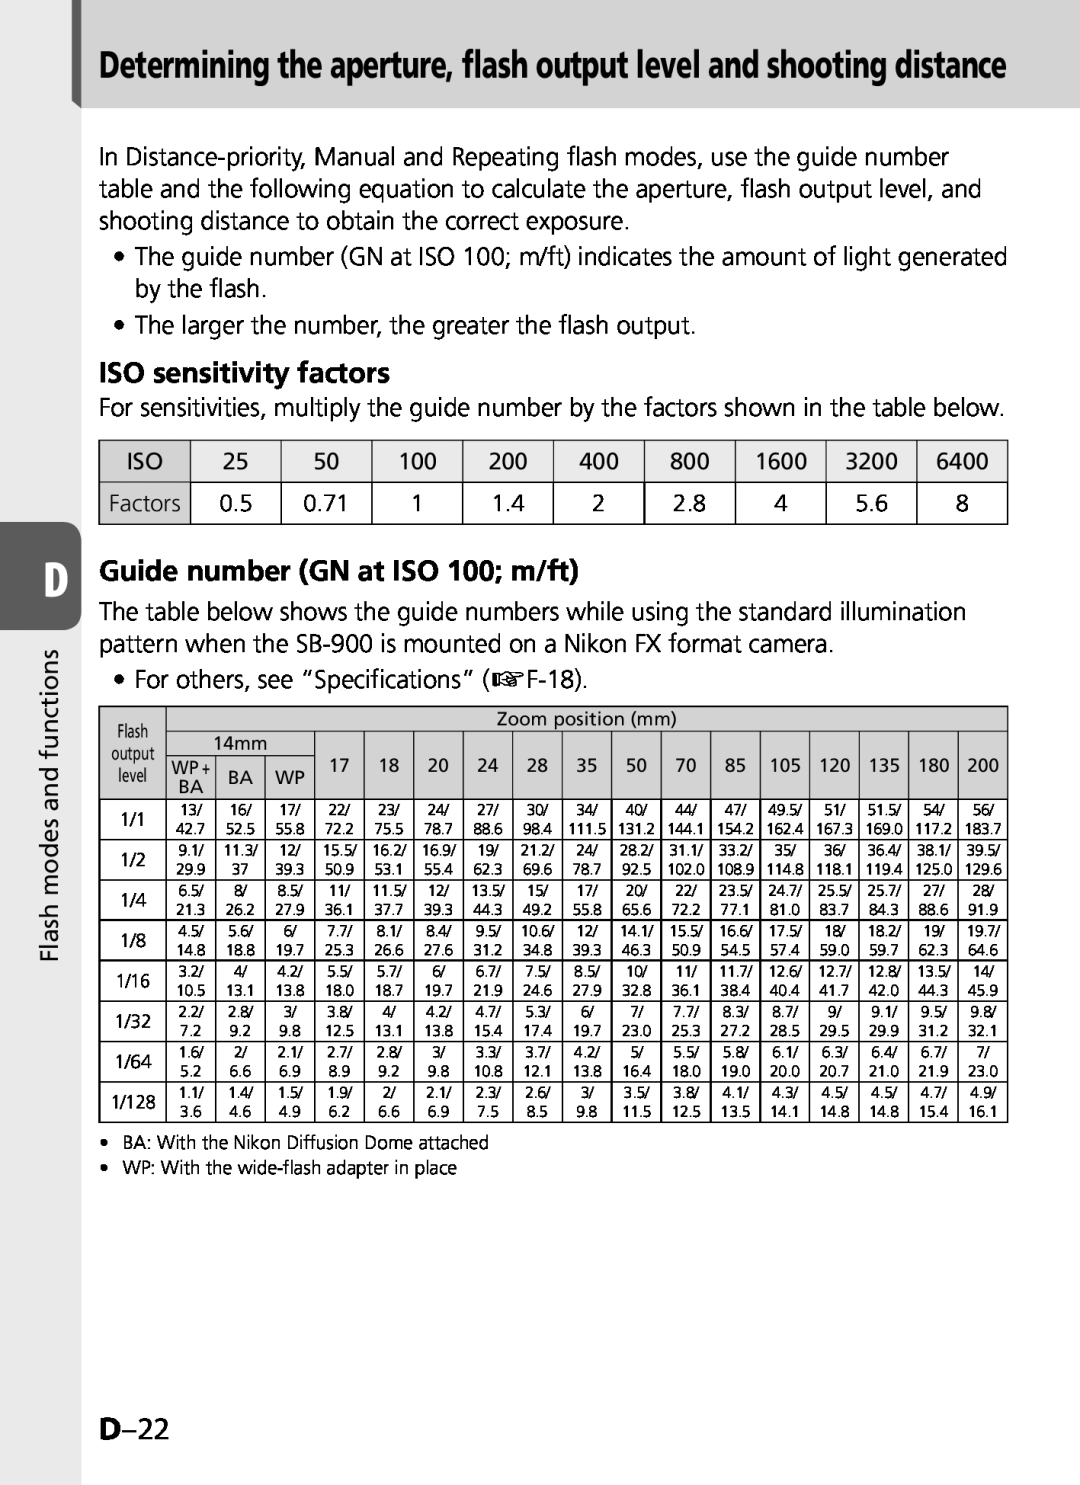 Univex SB-900 user manual D–22, ISO sensitivity factors, Guide number GN at ISO 100; m/ft 